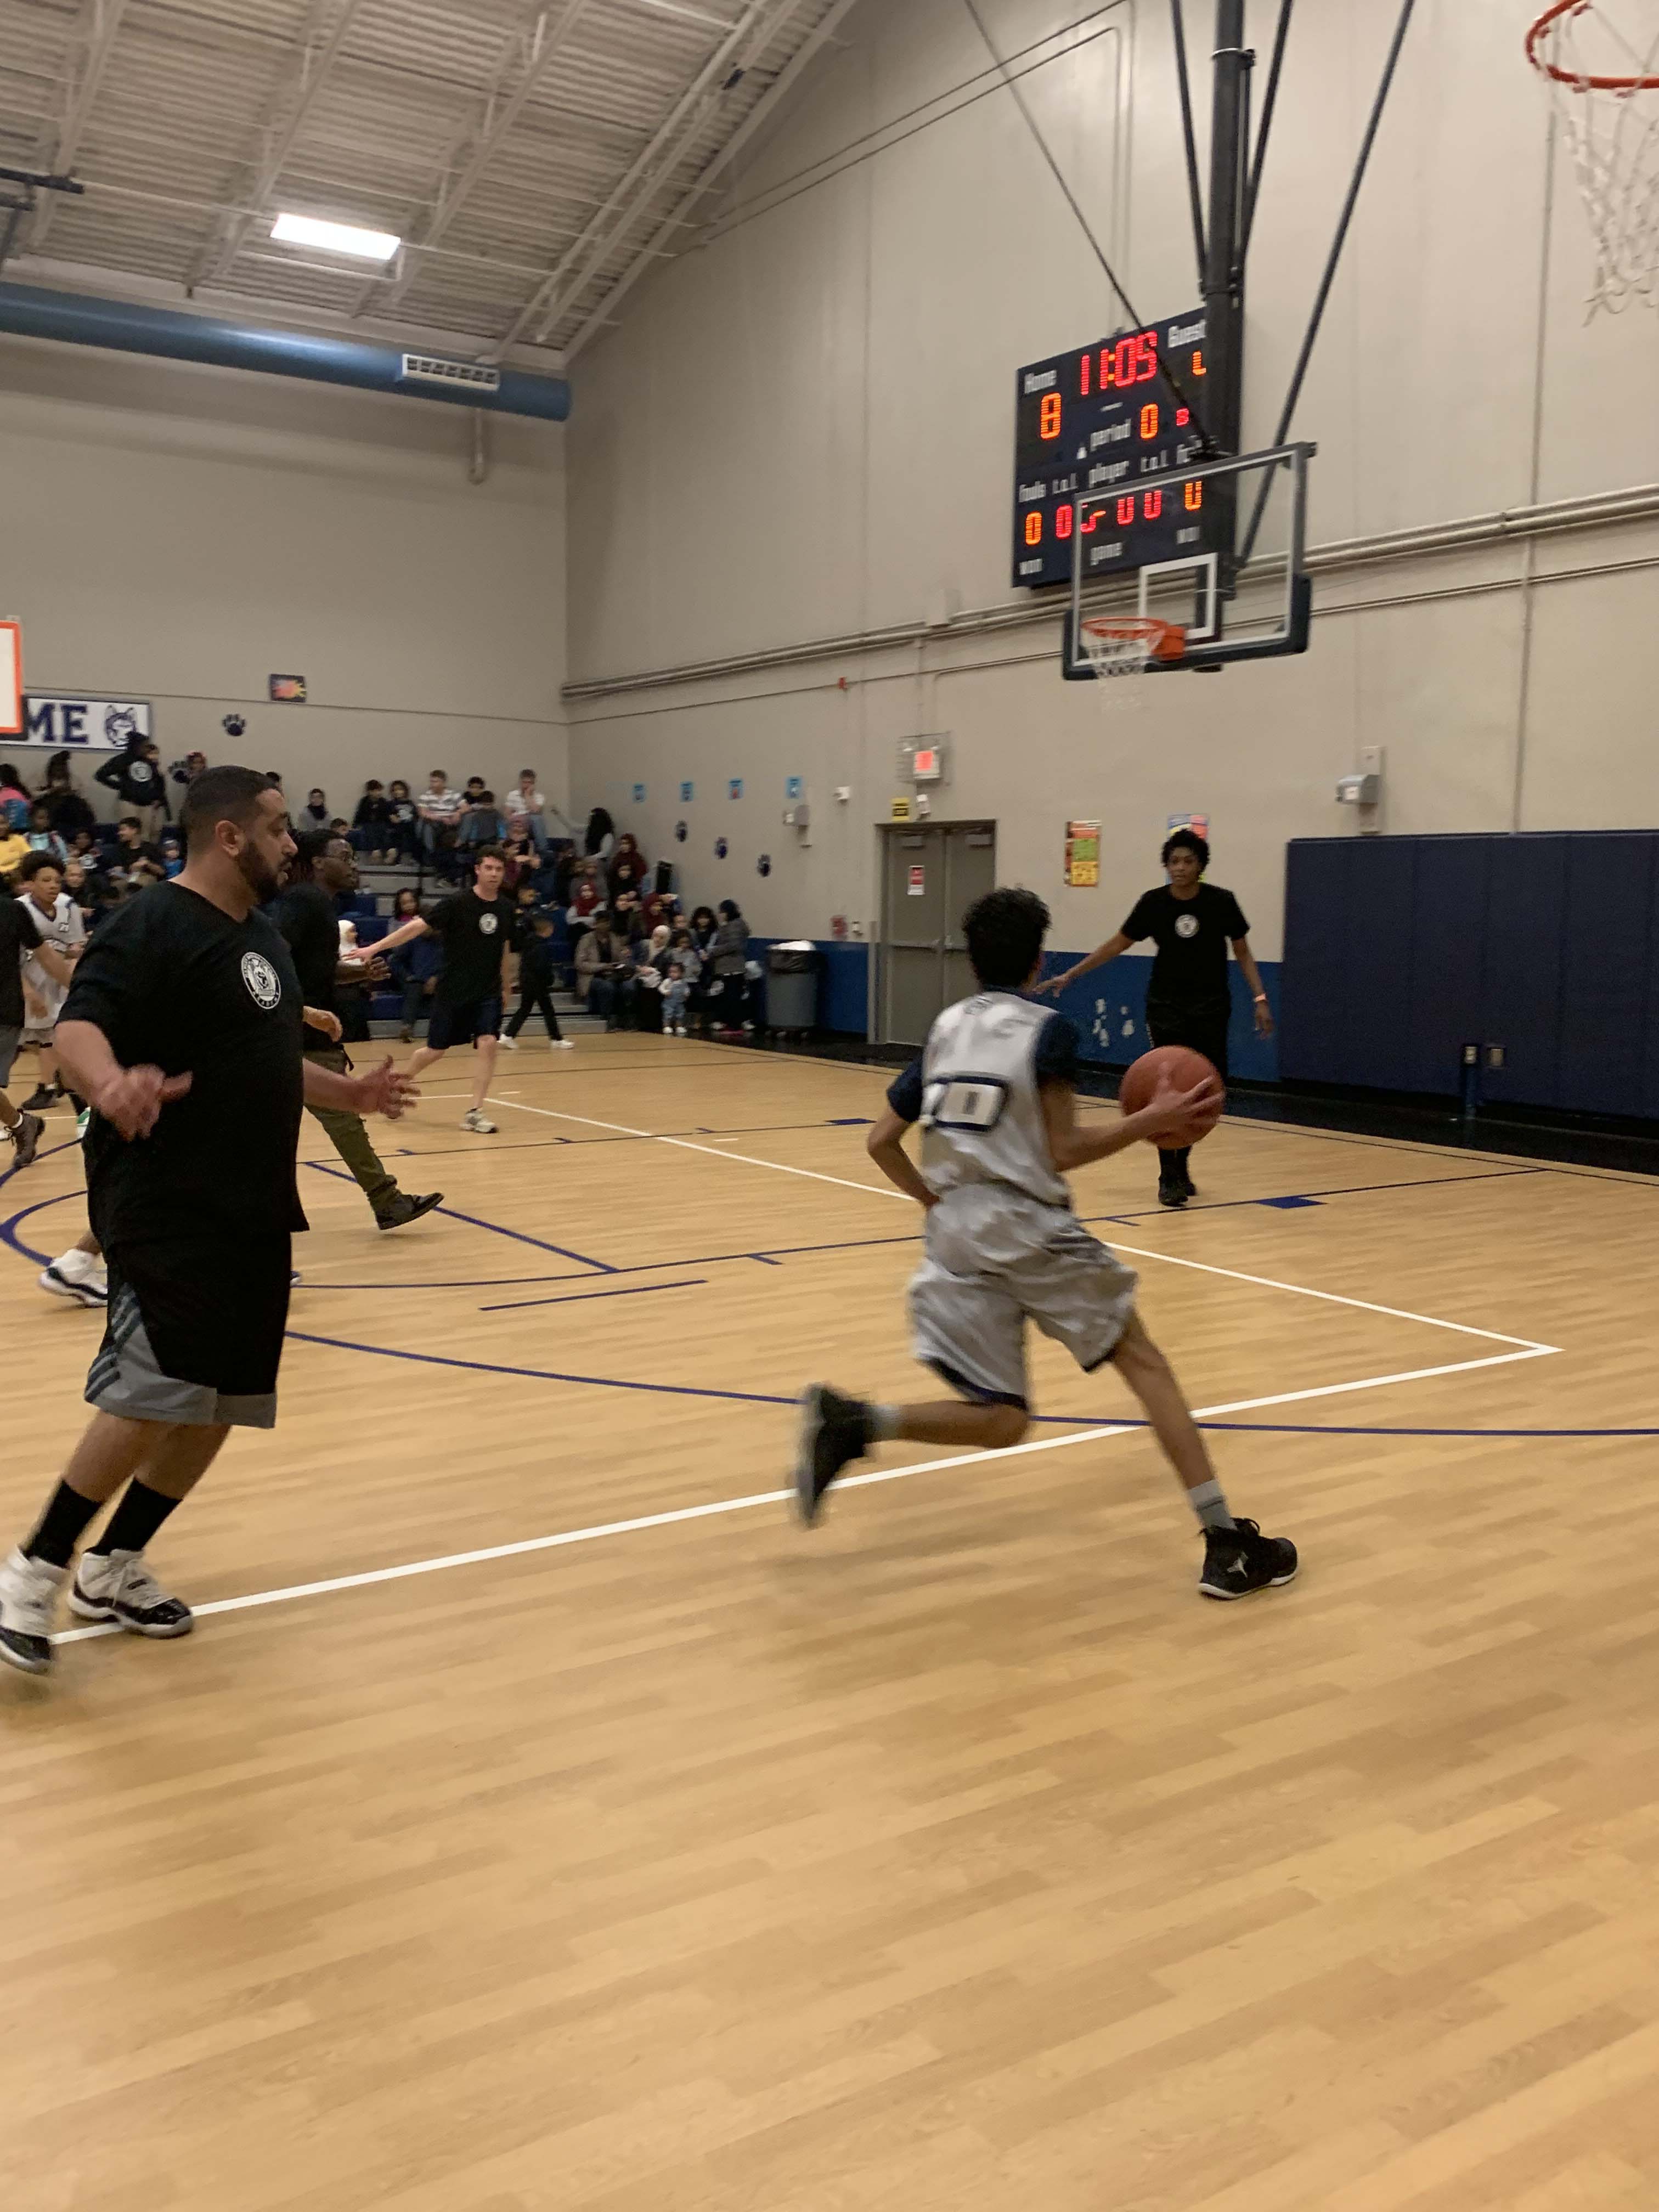 Hanley Academy Student vs Staff Basketball